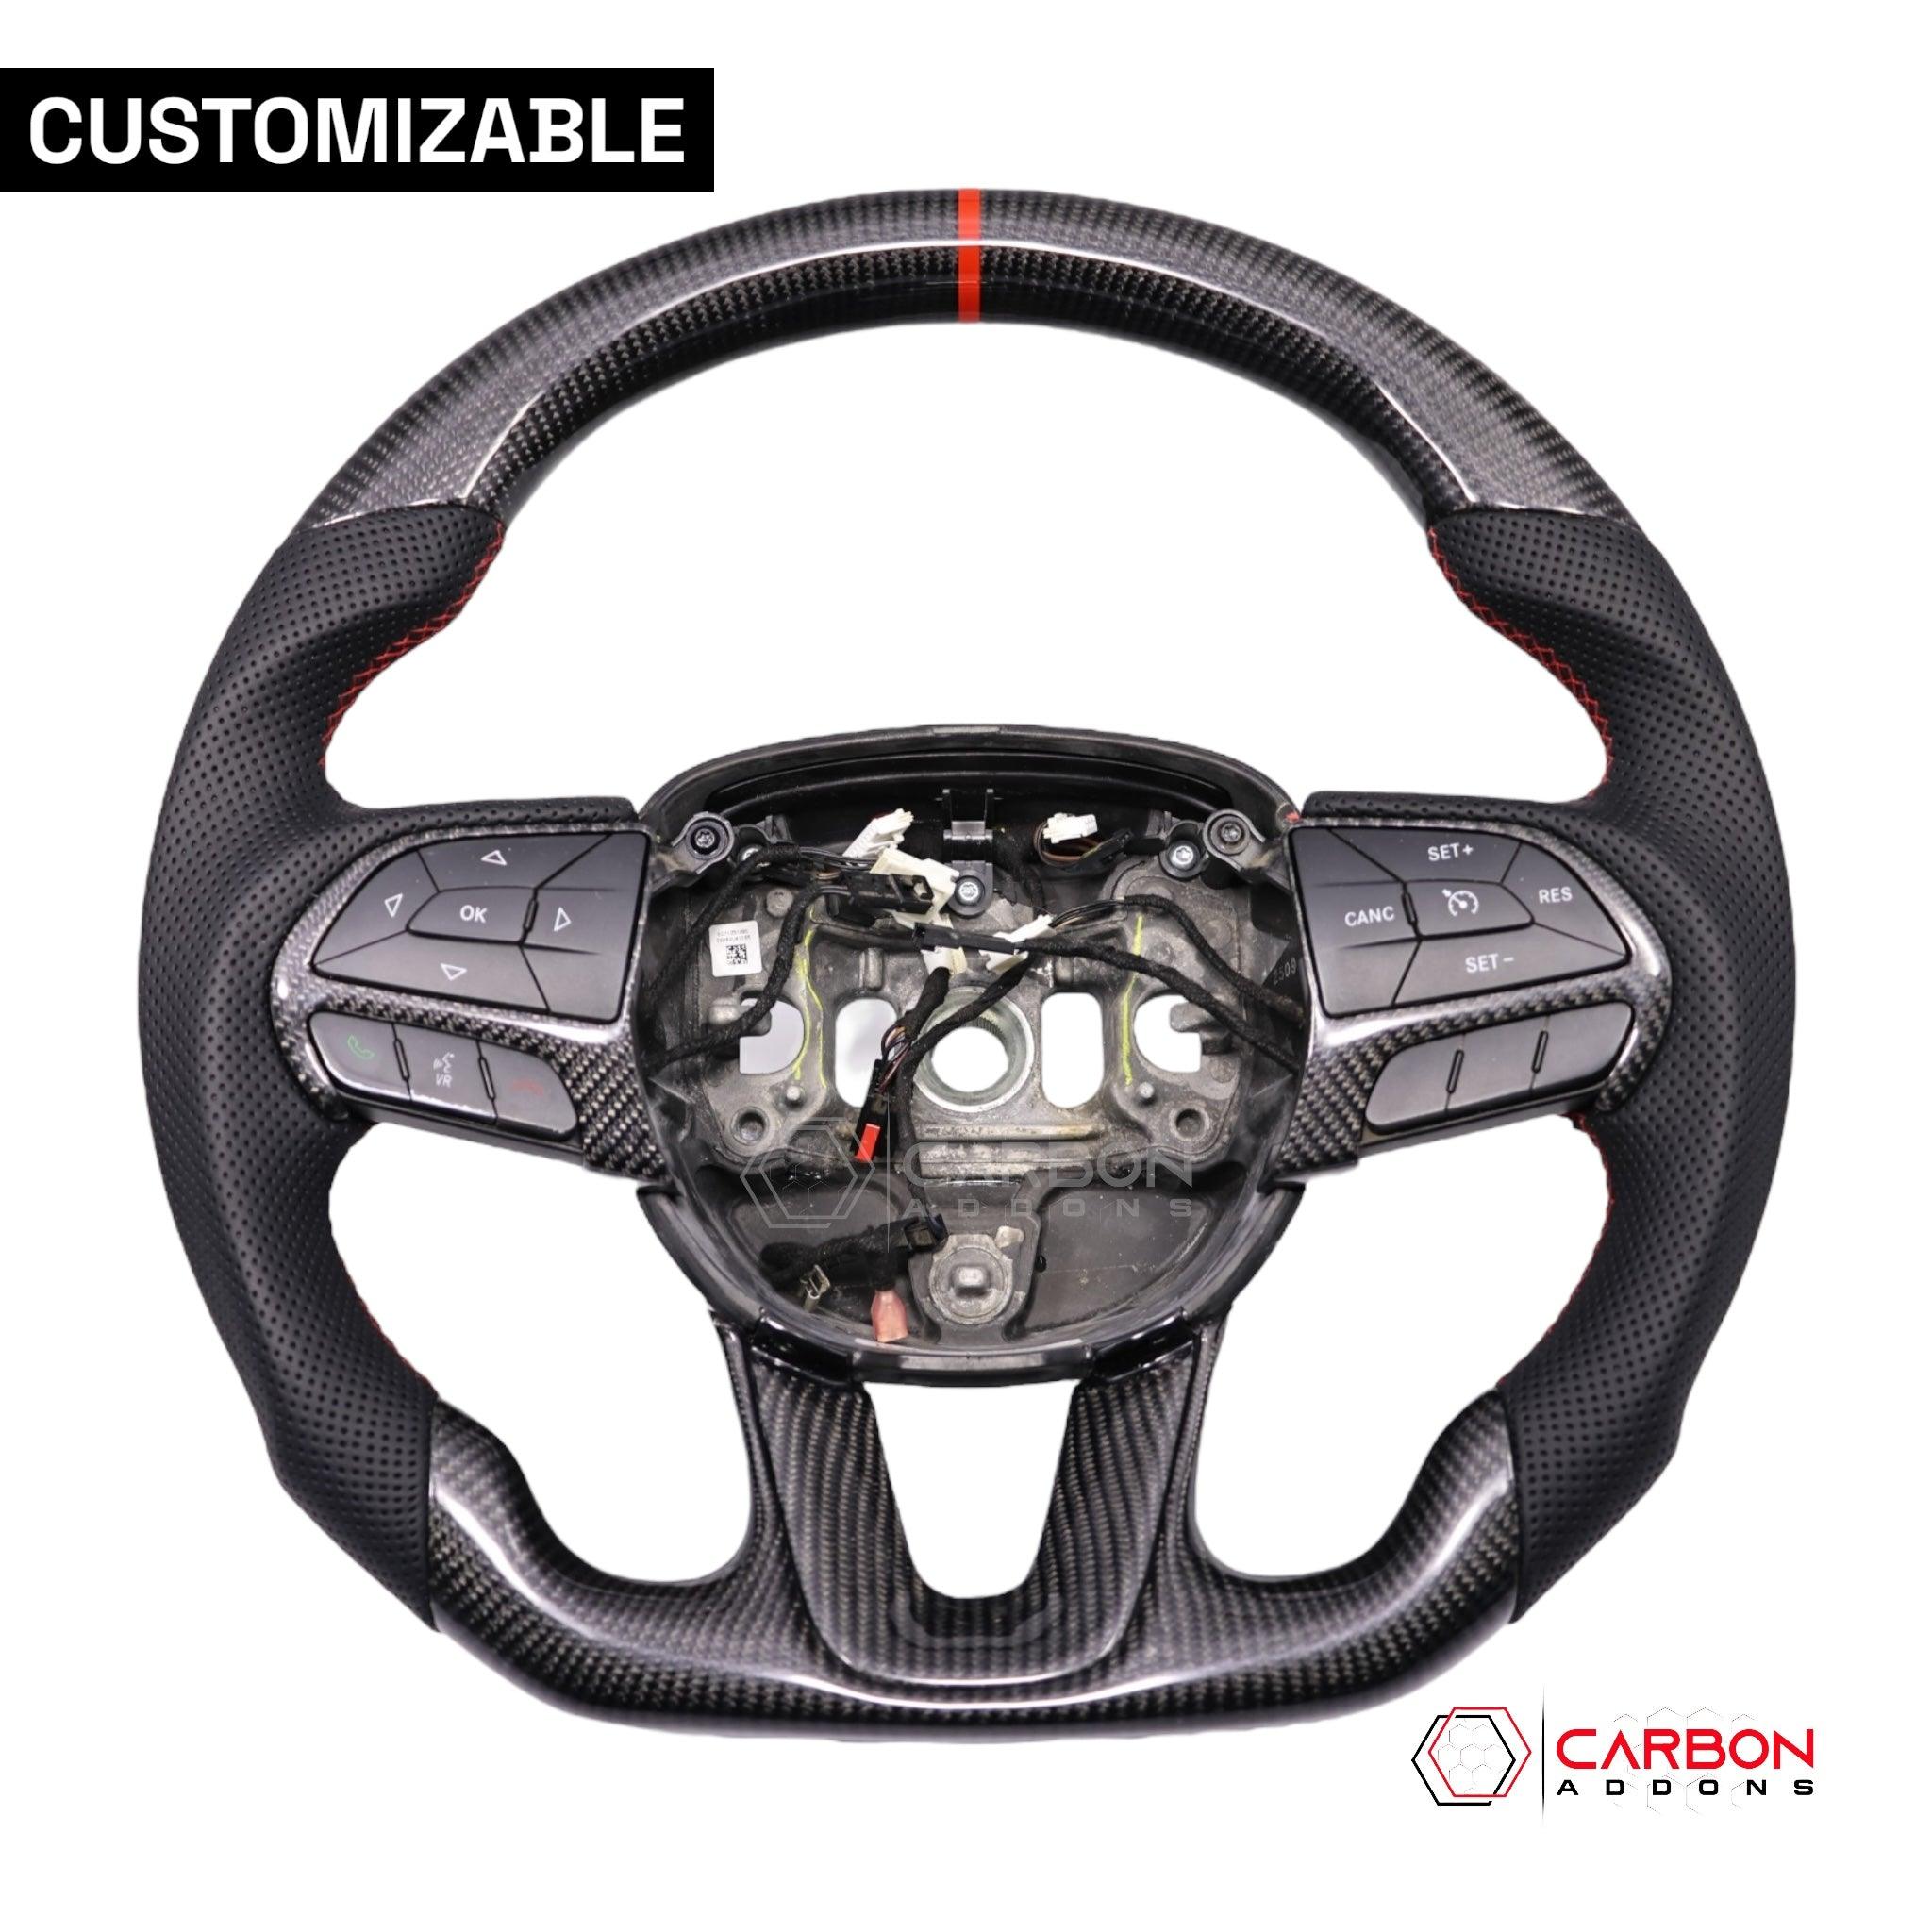 [Complete/Heated] Customizable Carbon Fiber Steering Wheel | 2015-2023 Dodge Charger Challenger Durango - carbonaddons Carbon Fiber Parts, Accessories, Upgrades, Mods